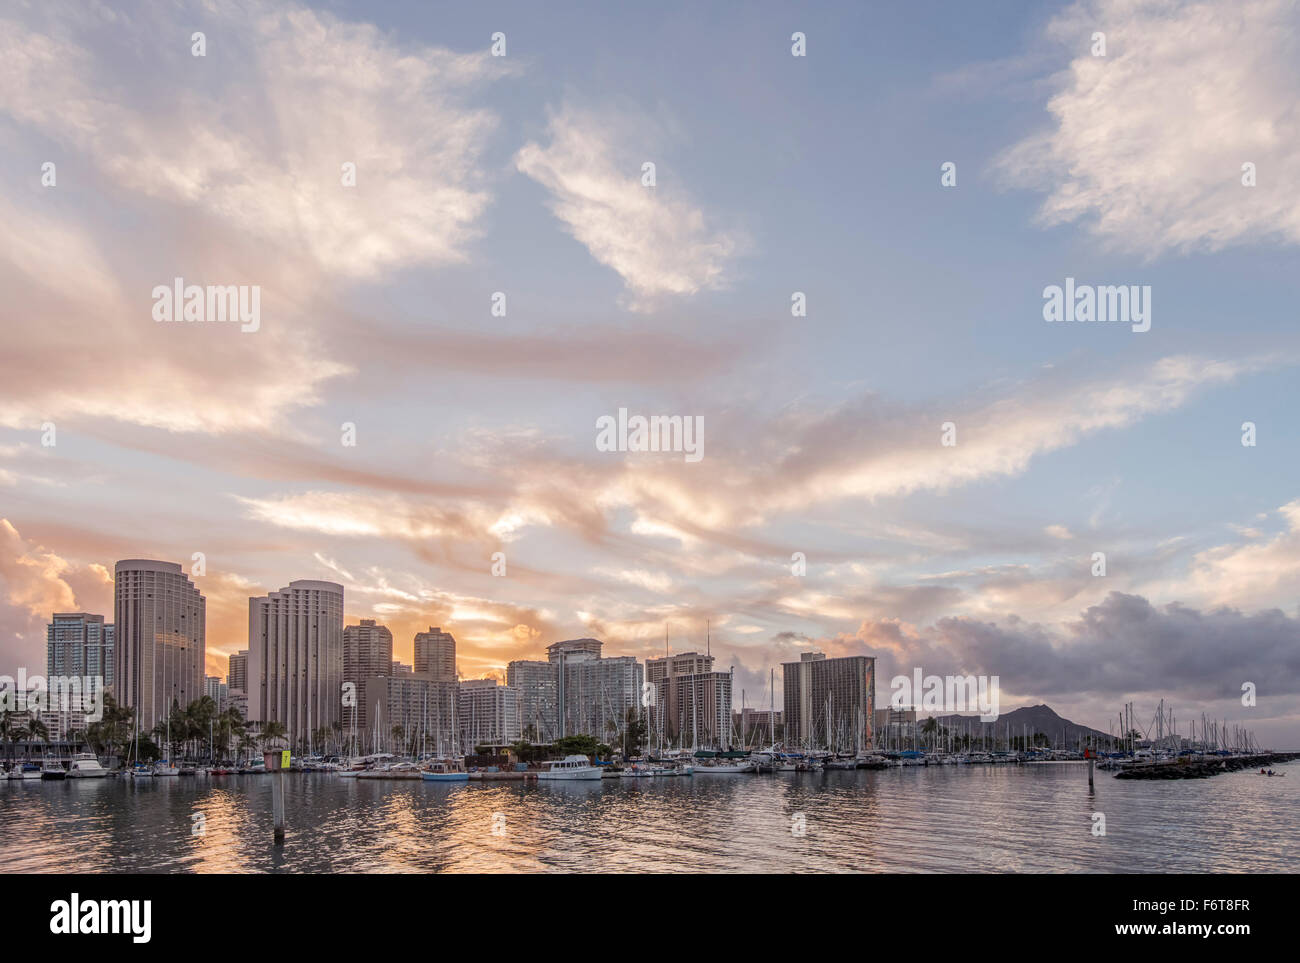 Honolulu city skyline over ocean, Hawaii, United States Stock Photo